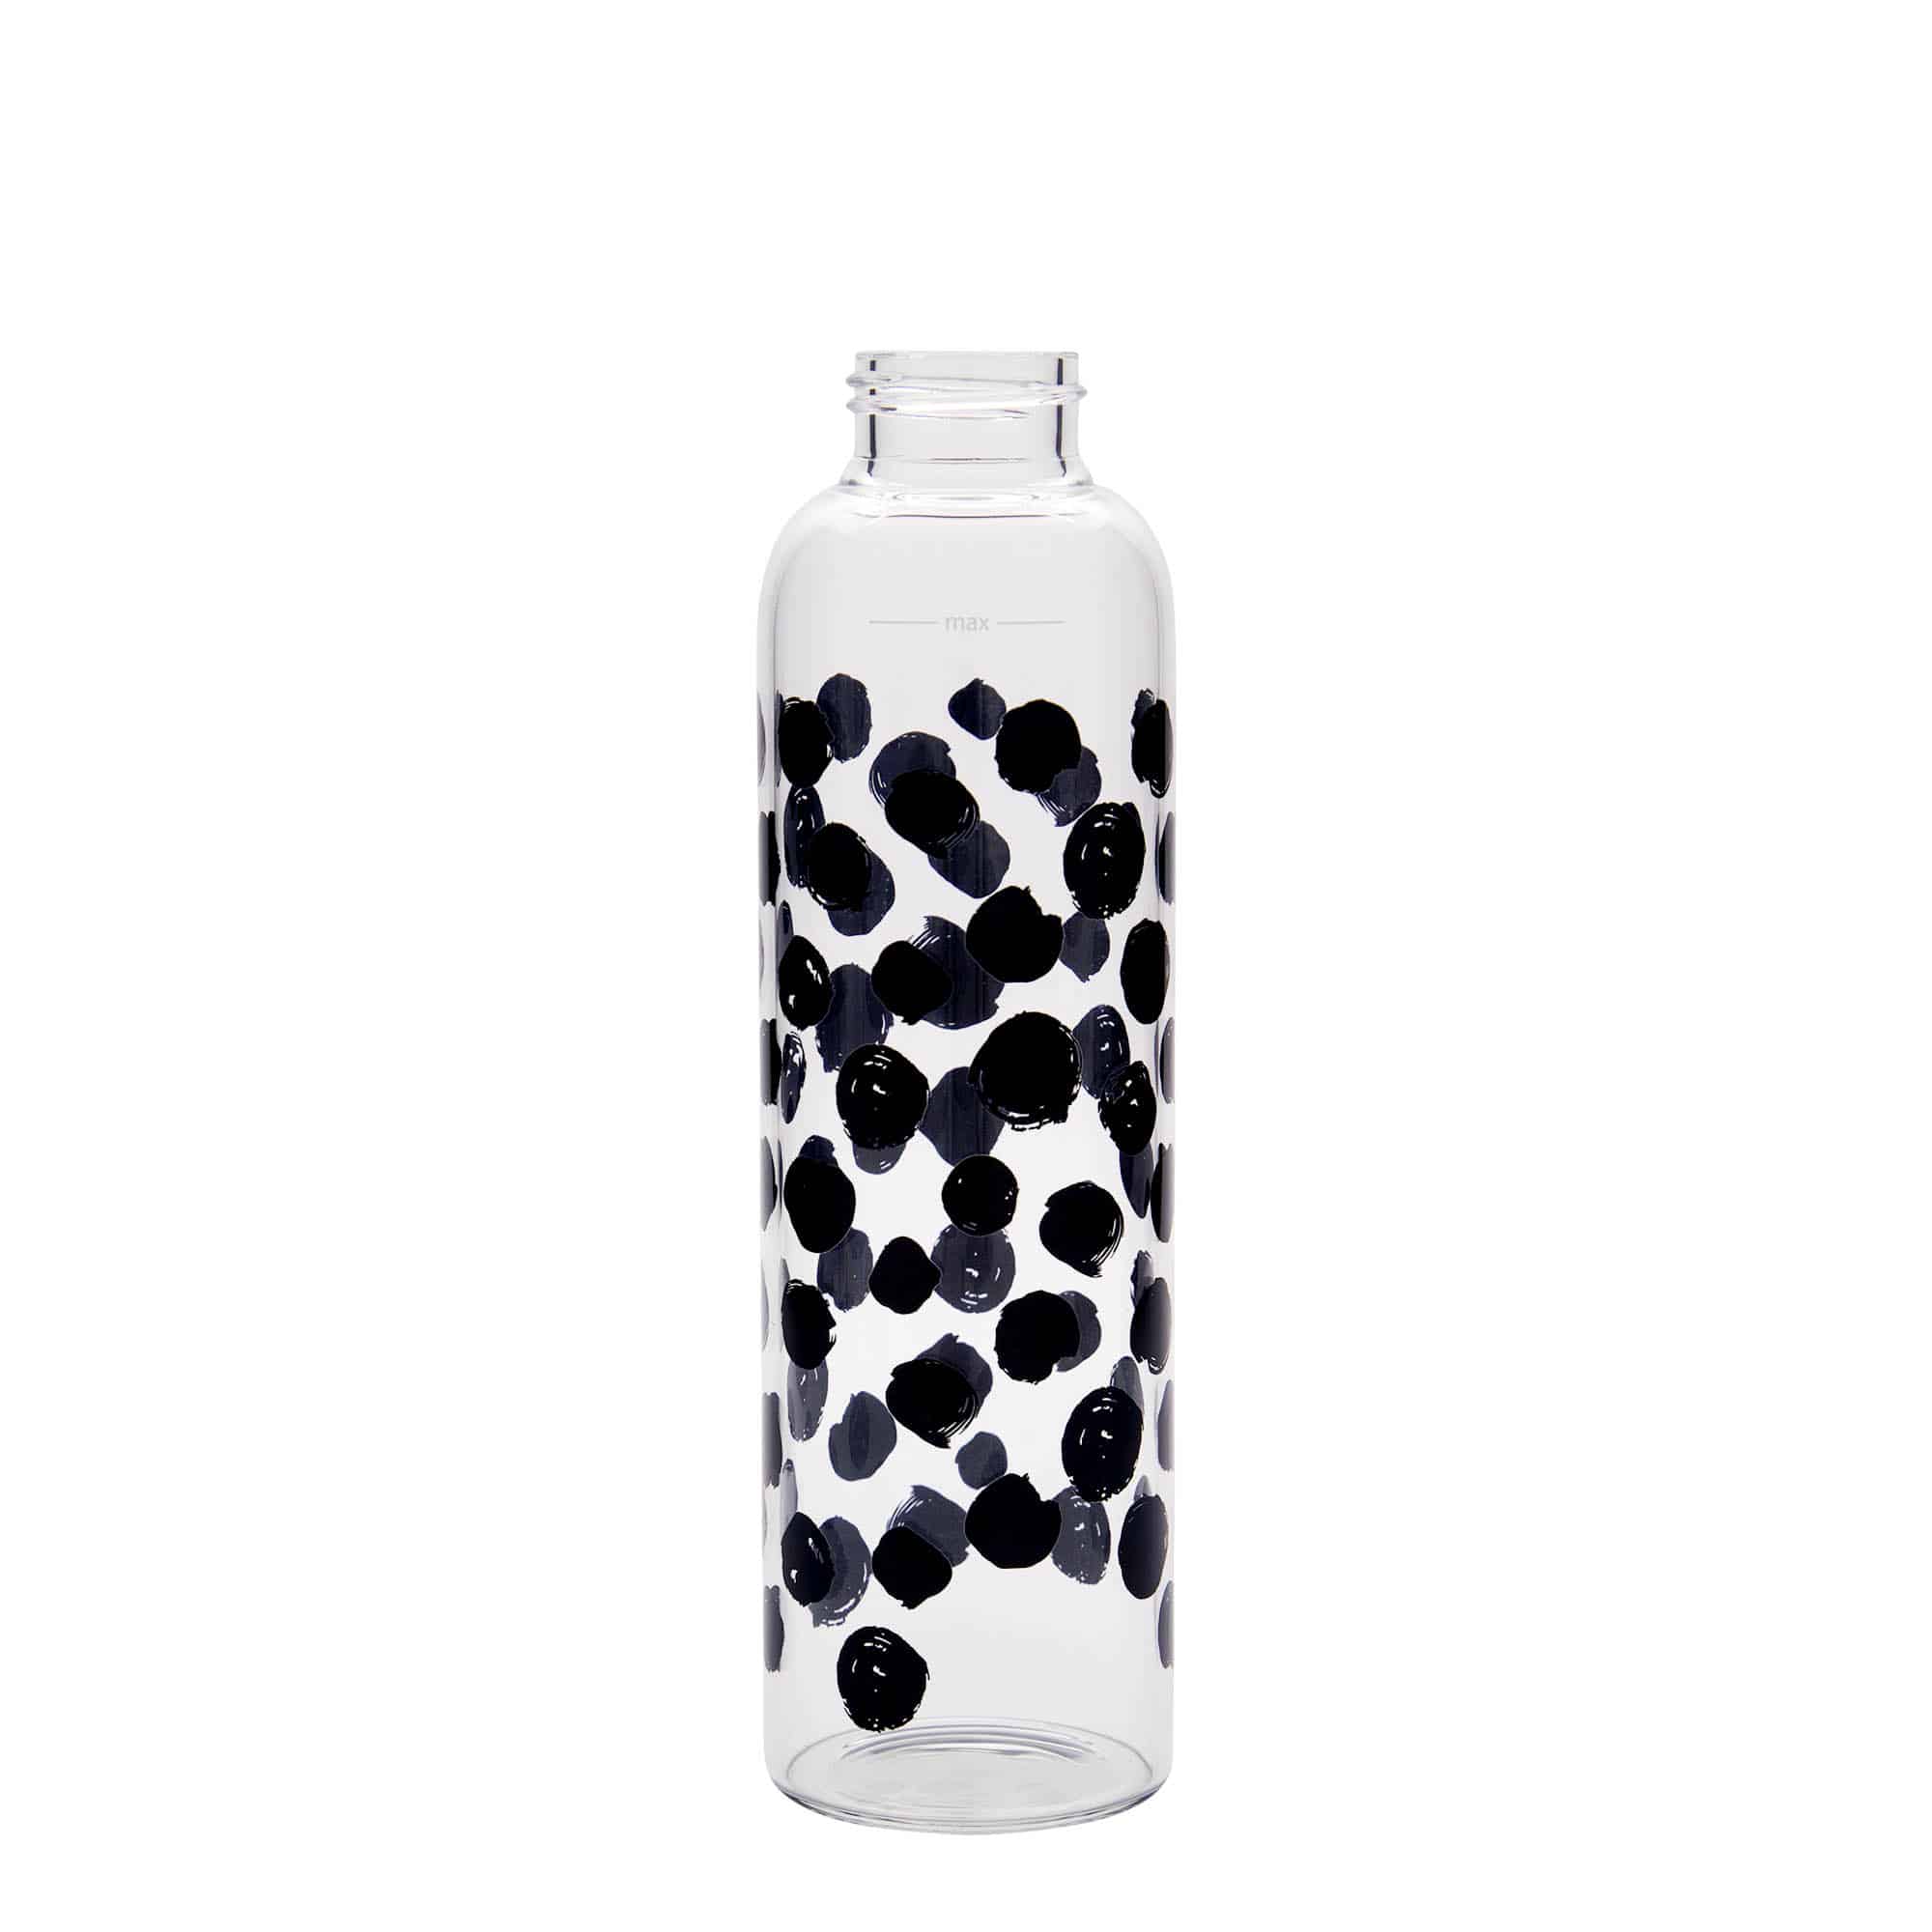 500 ml water bottle 'Perseus', print: black dots, closure: screw cap